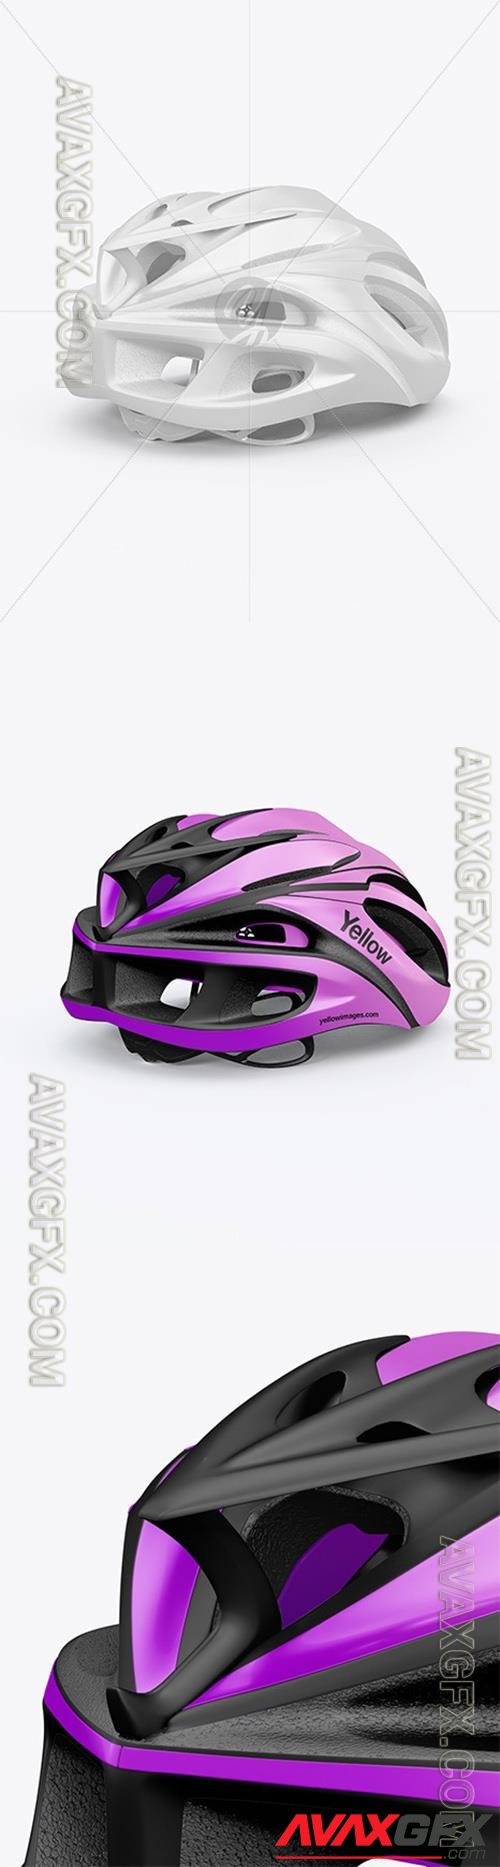 Cycling Helmet Mockup 97240